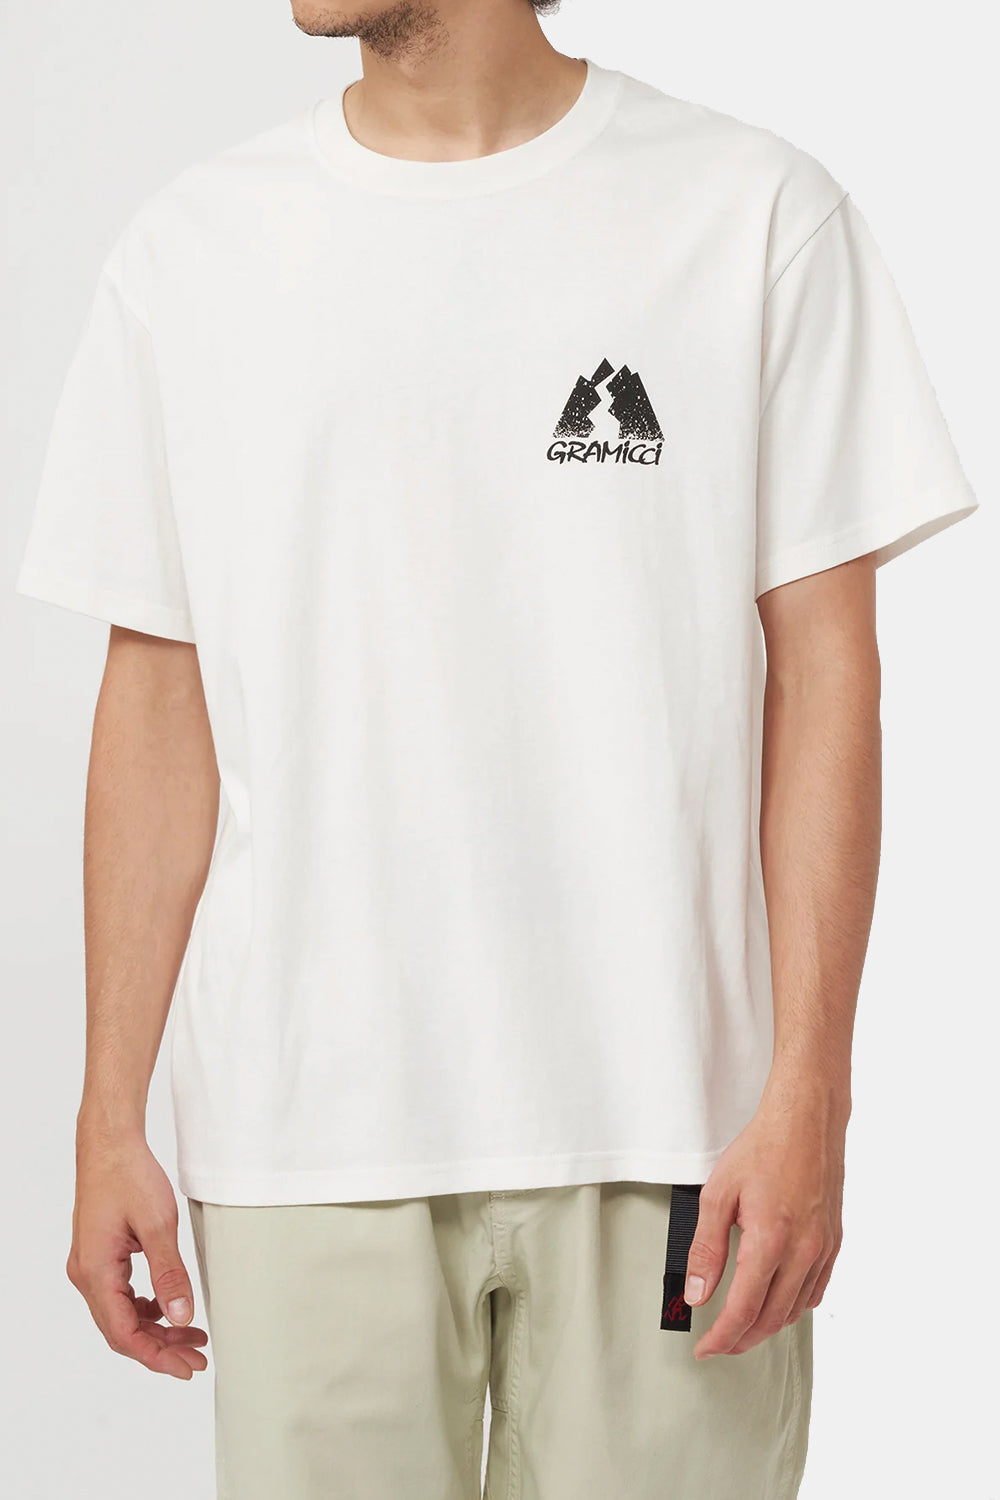 Gramicci Summit T-Shirt (White)